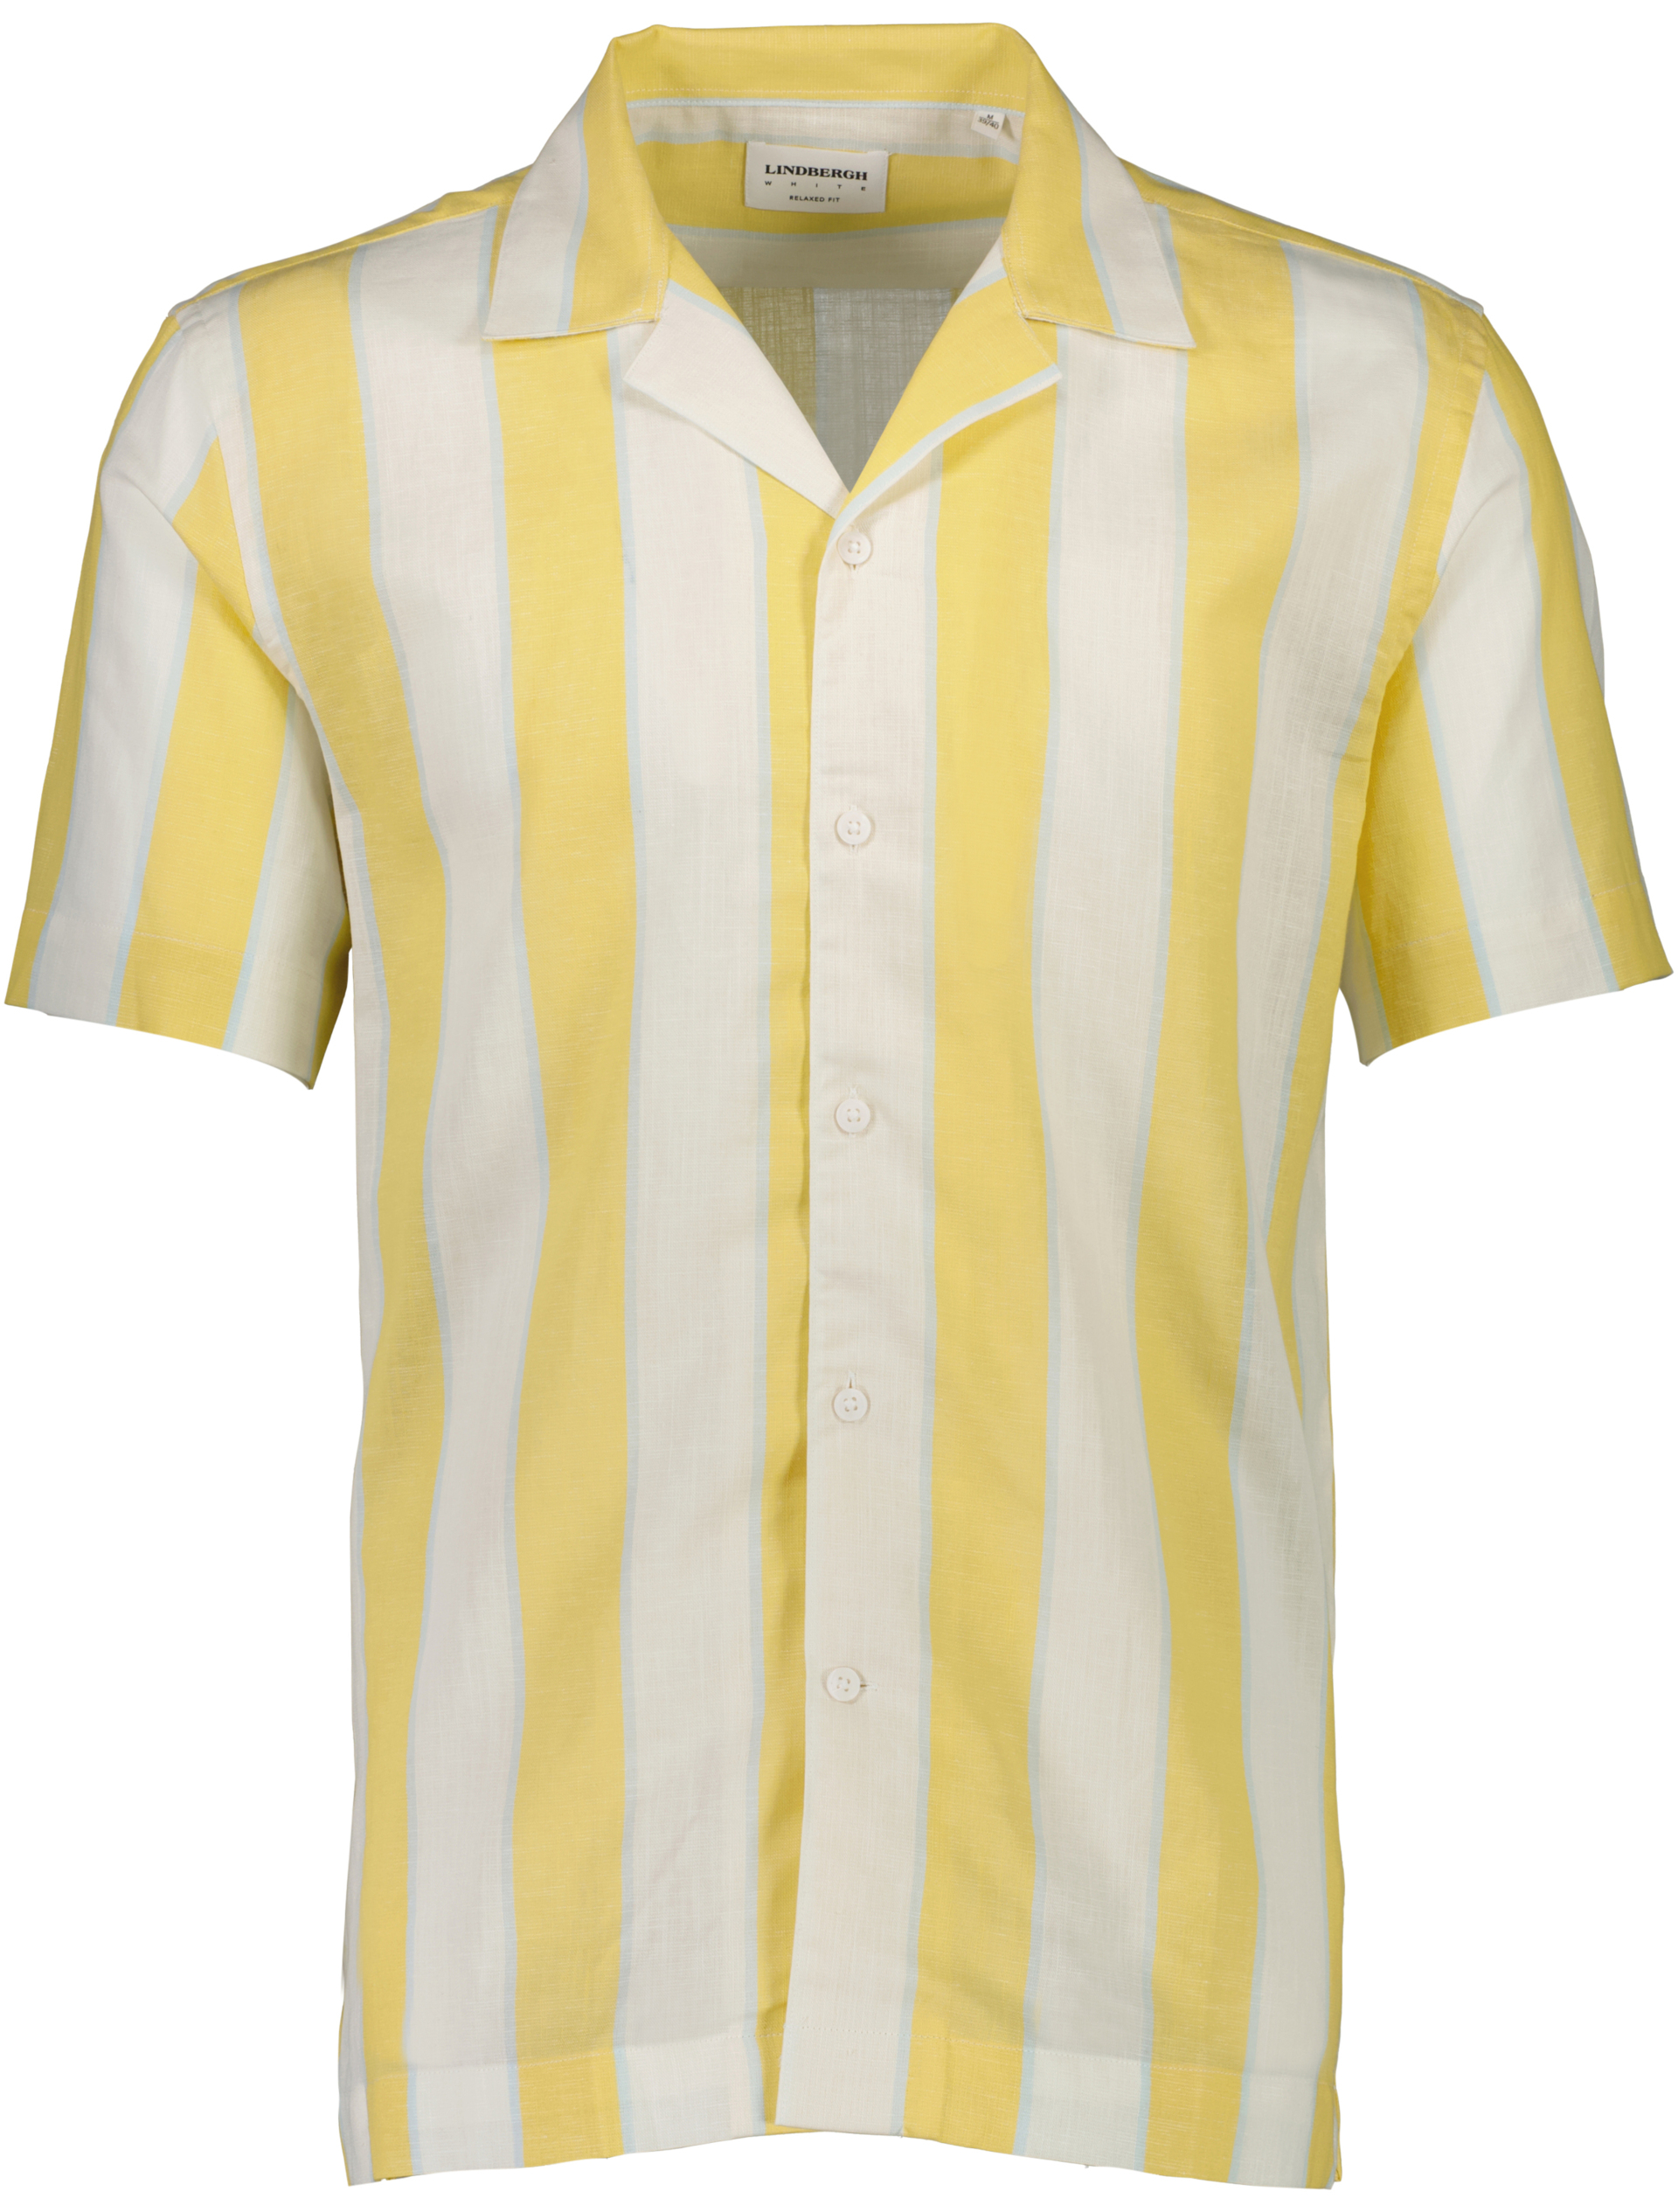 Lindbergh Linen shirt yellow / yellow